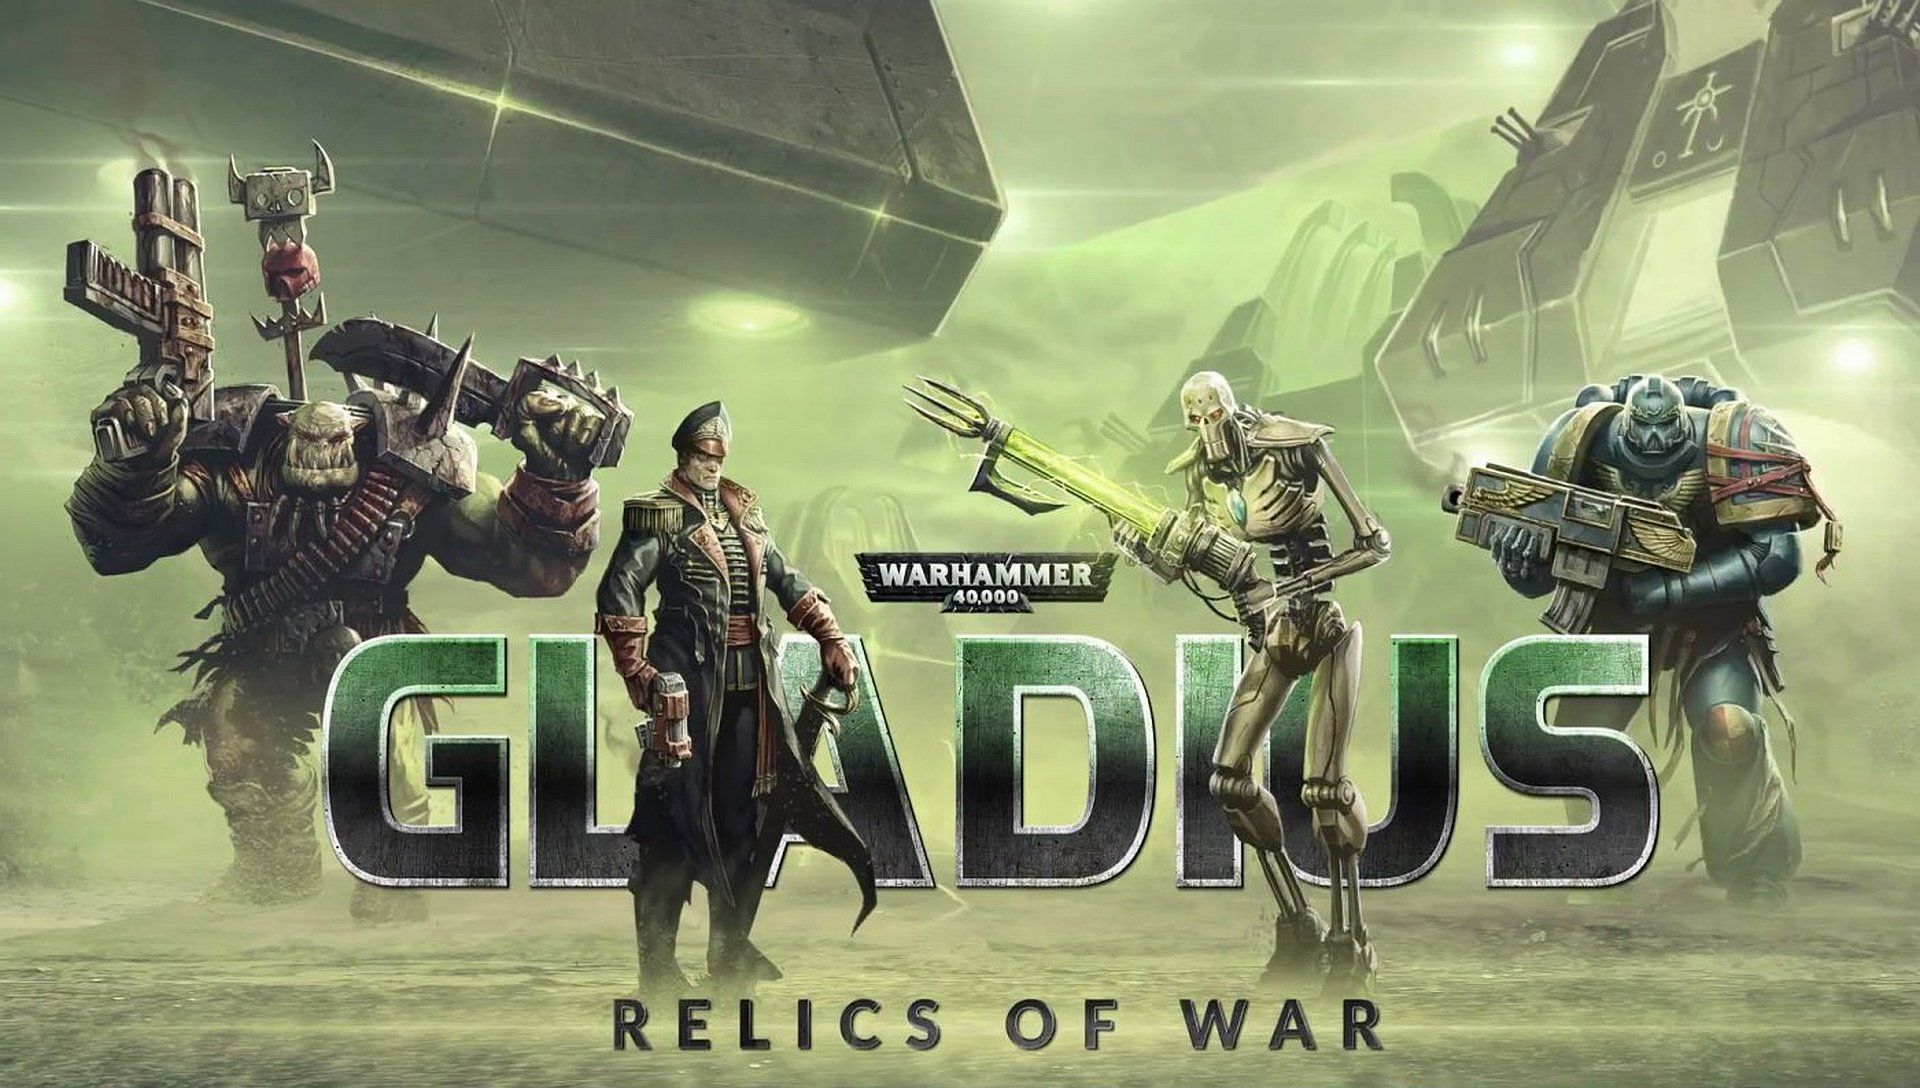 Warhammer 40,000: Gladius - Relics of War is FREE on Steam